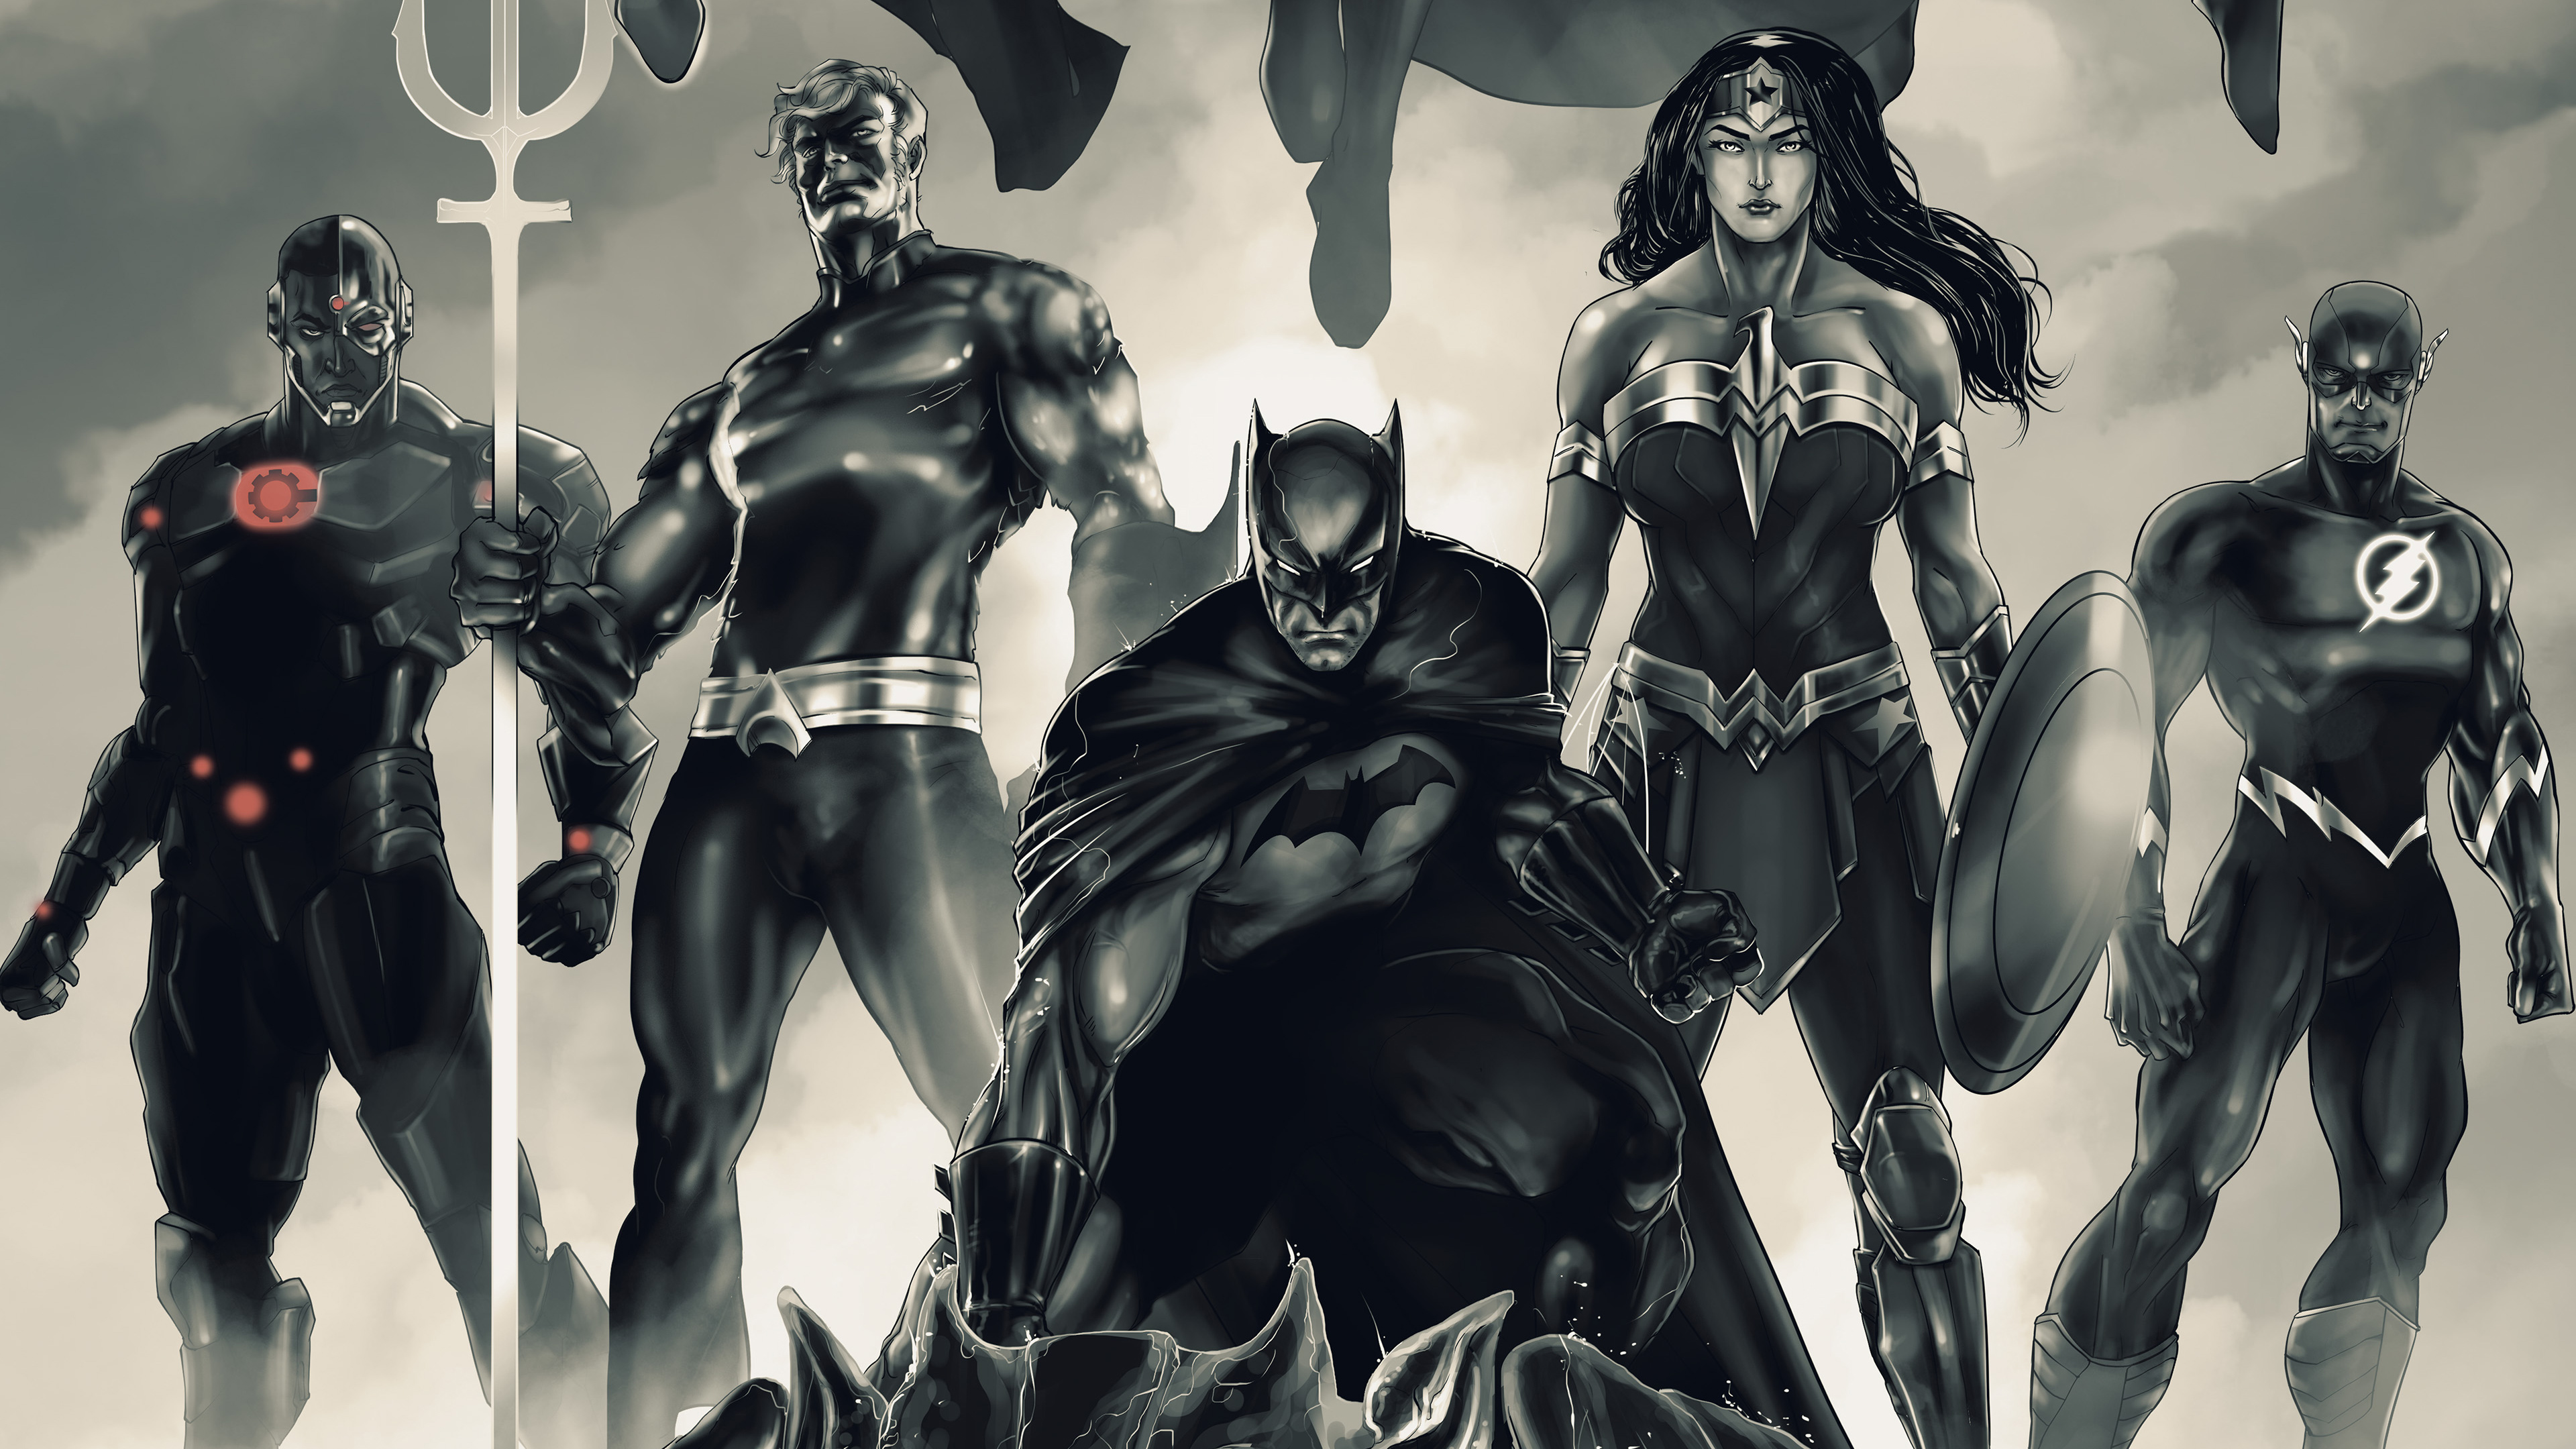 Comics Justice League 4k Ultra HD Wallpaper by Arka Chakraborty